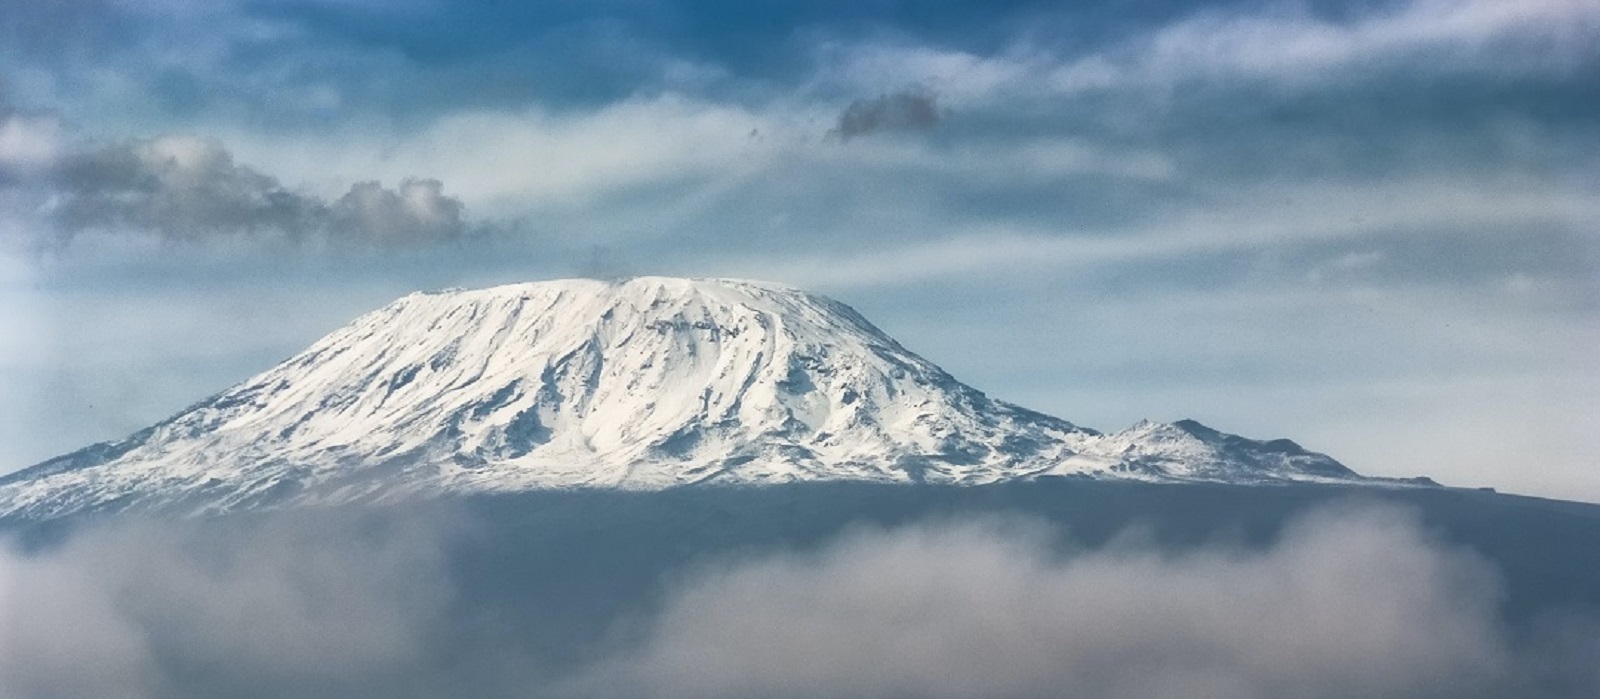 Kilimanjaro hiking with Netflix Tours